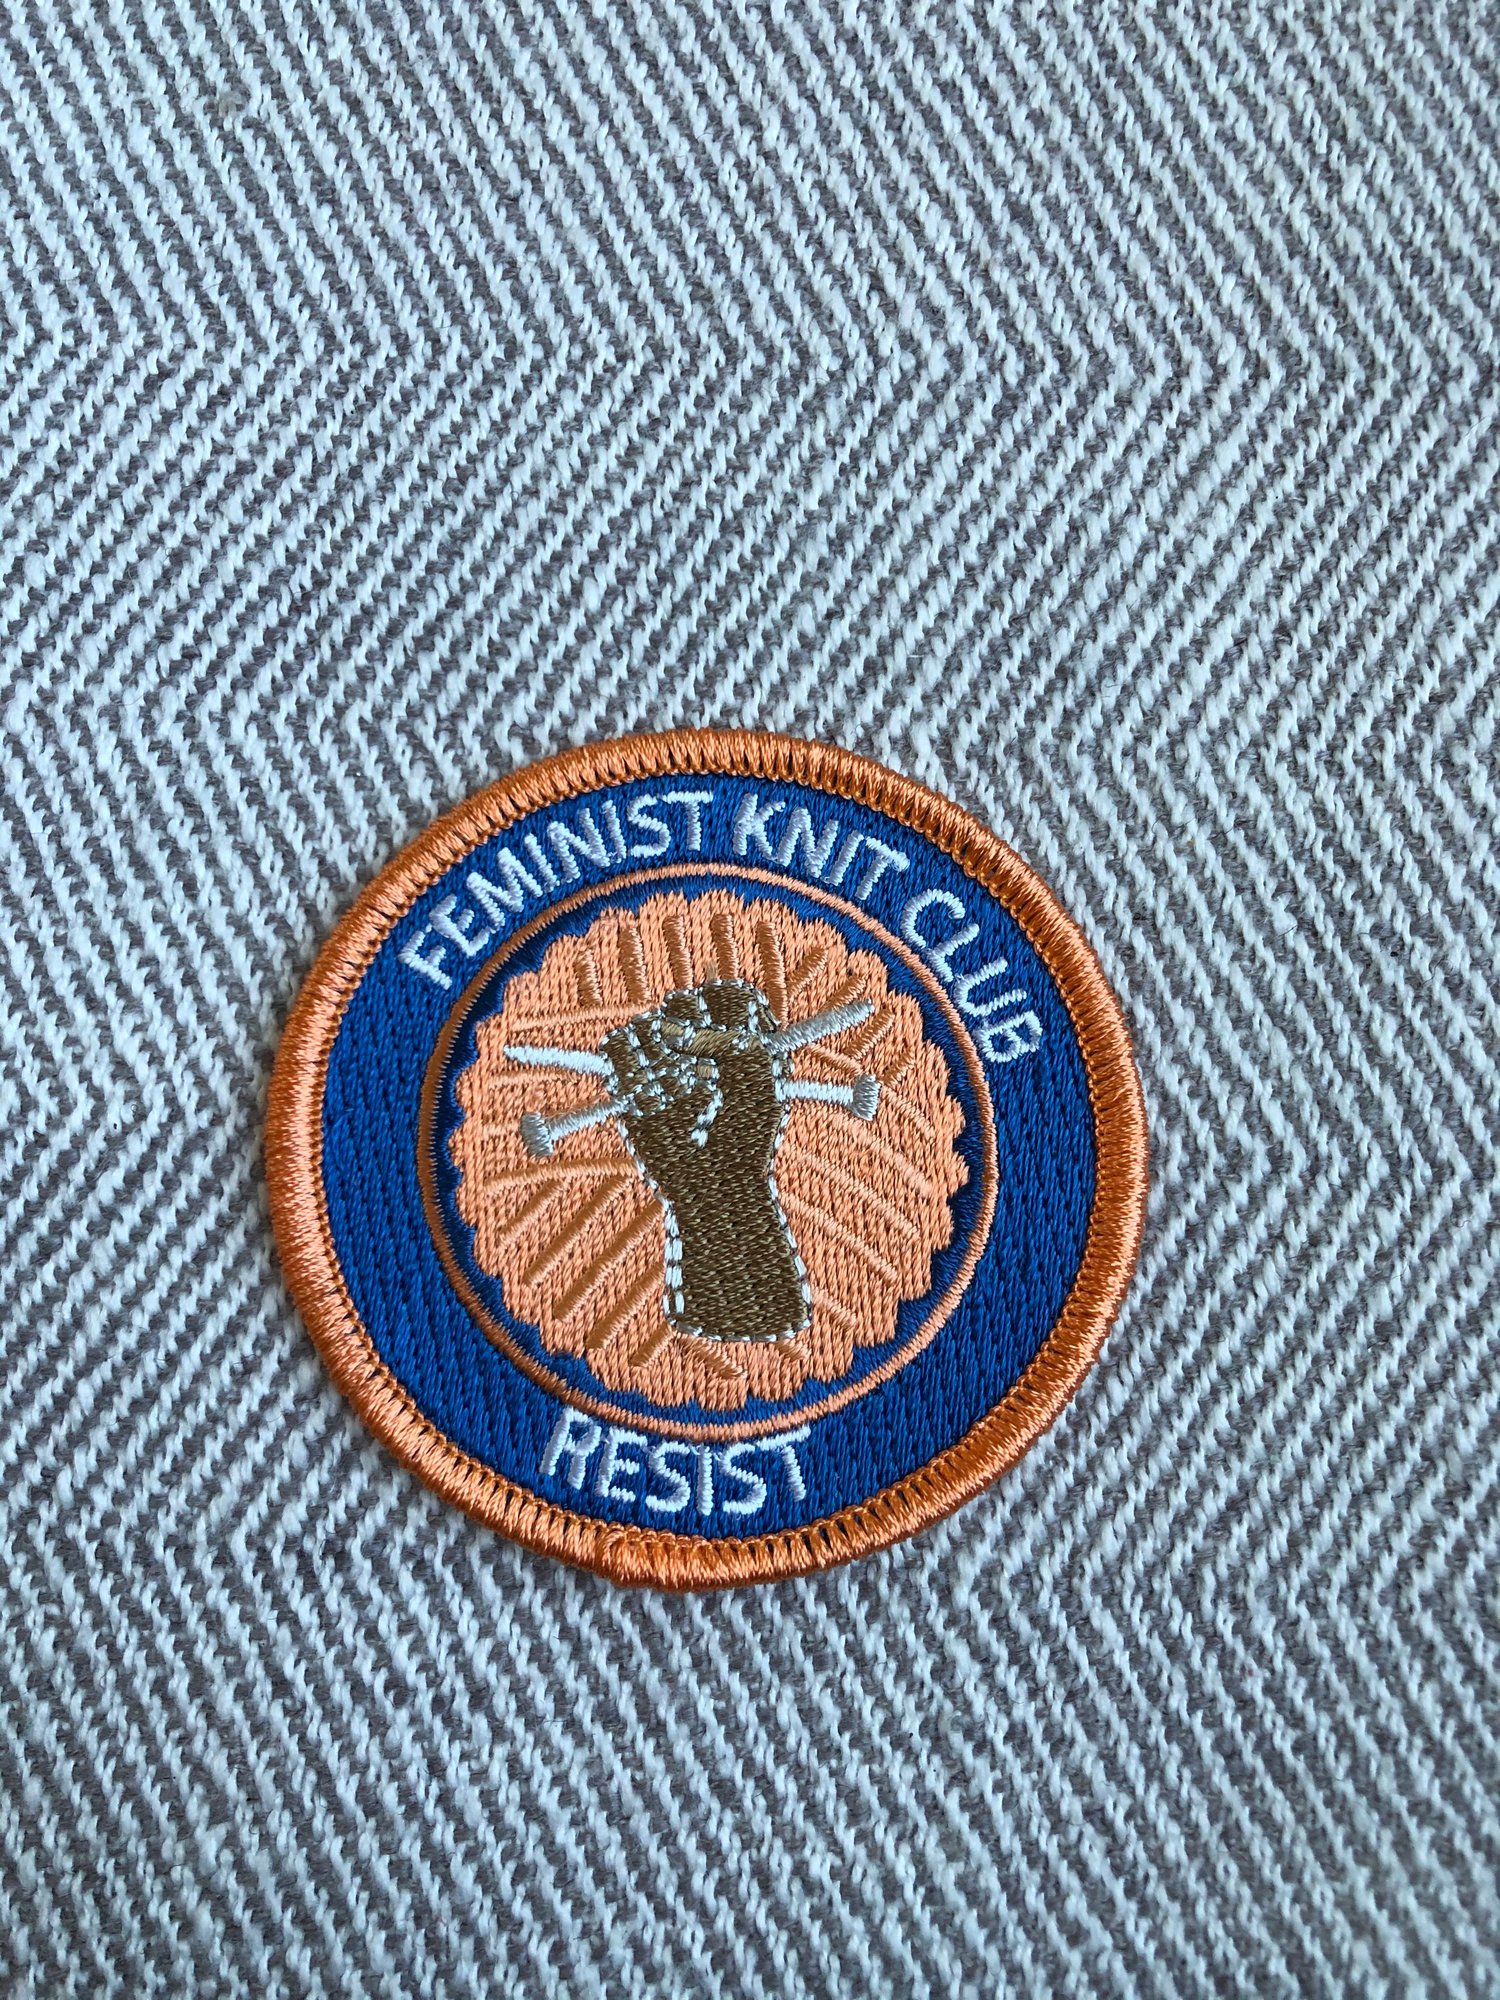 Image of Feminist Knit Club Badge